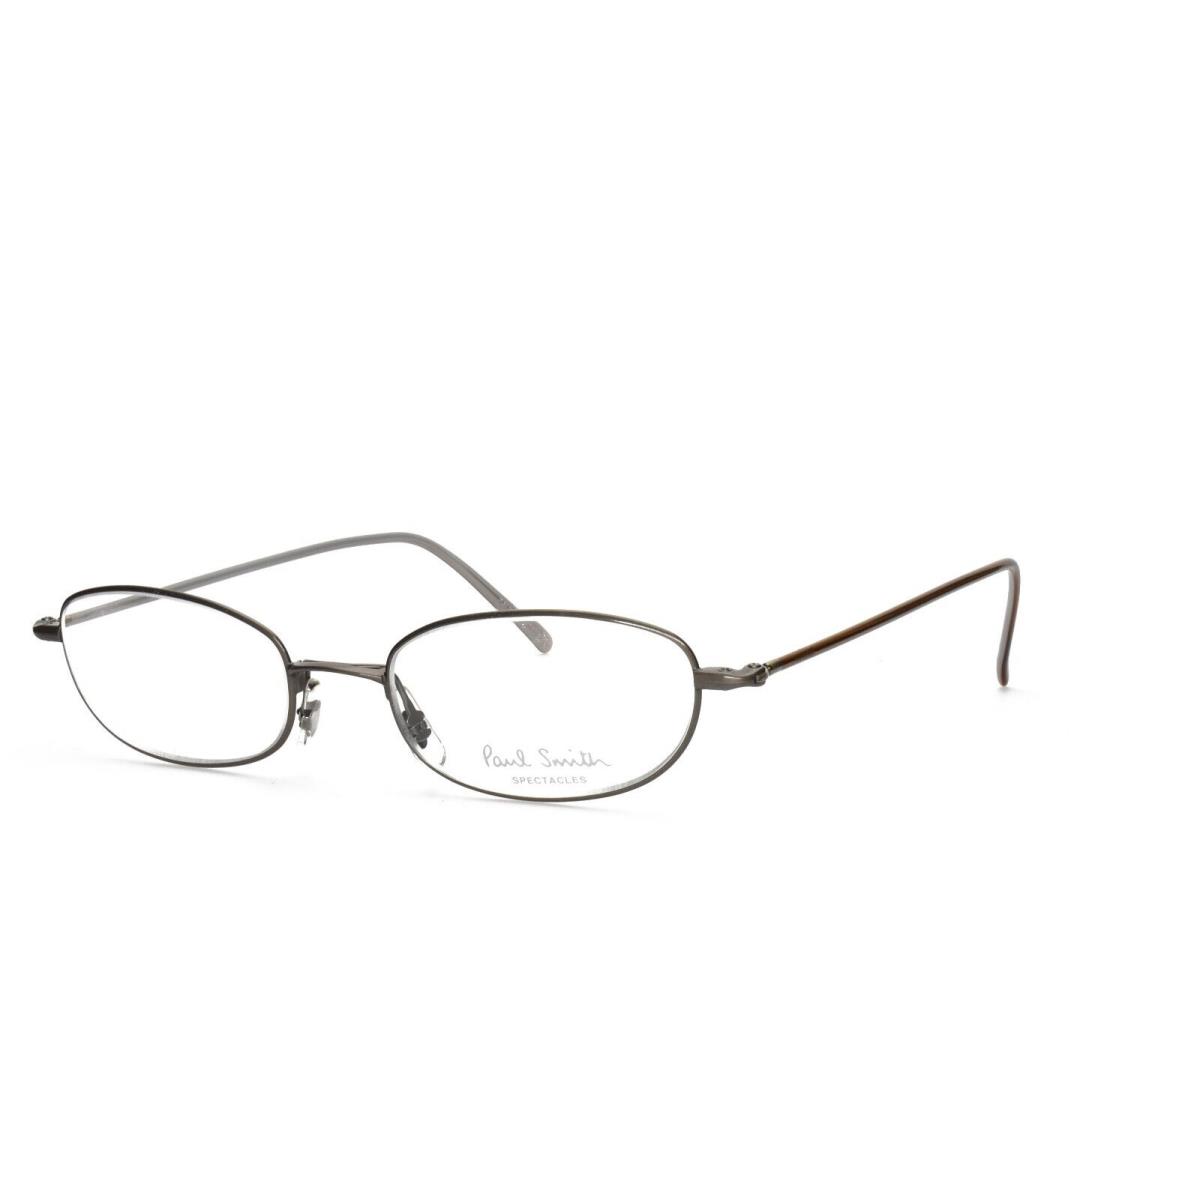 Paul Smith 140 FB 49-18-145 Pewter Gray Vtg Vintage Eyeglasses Frames